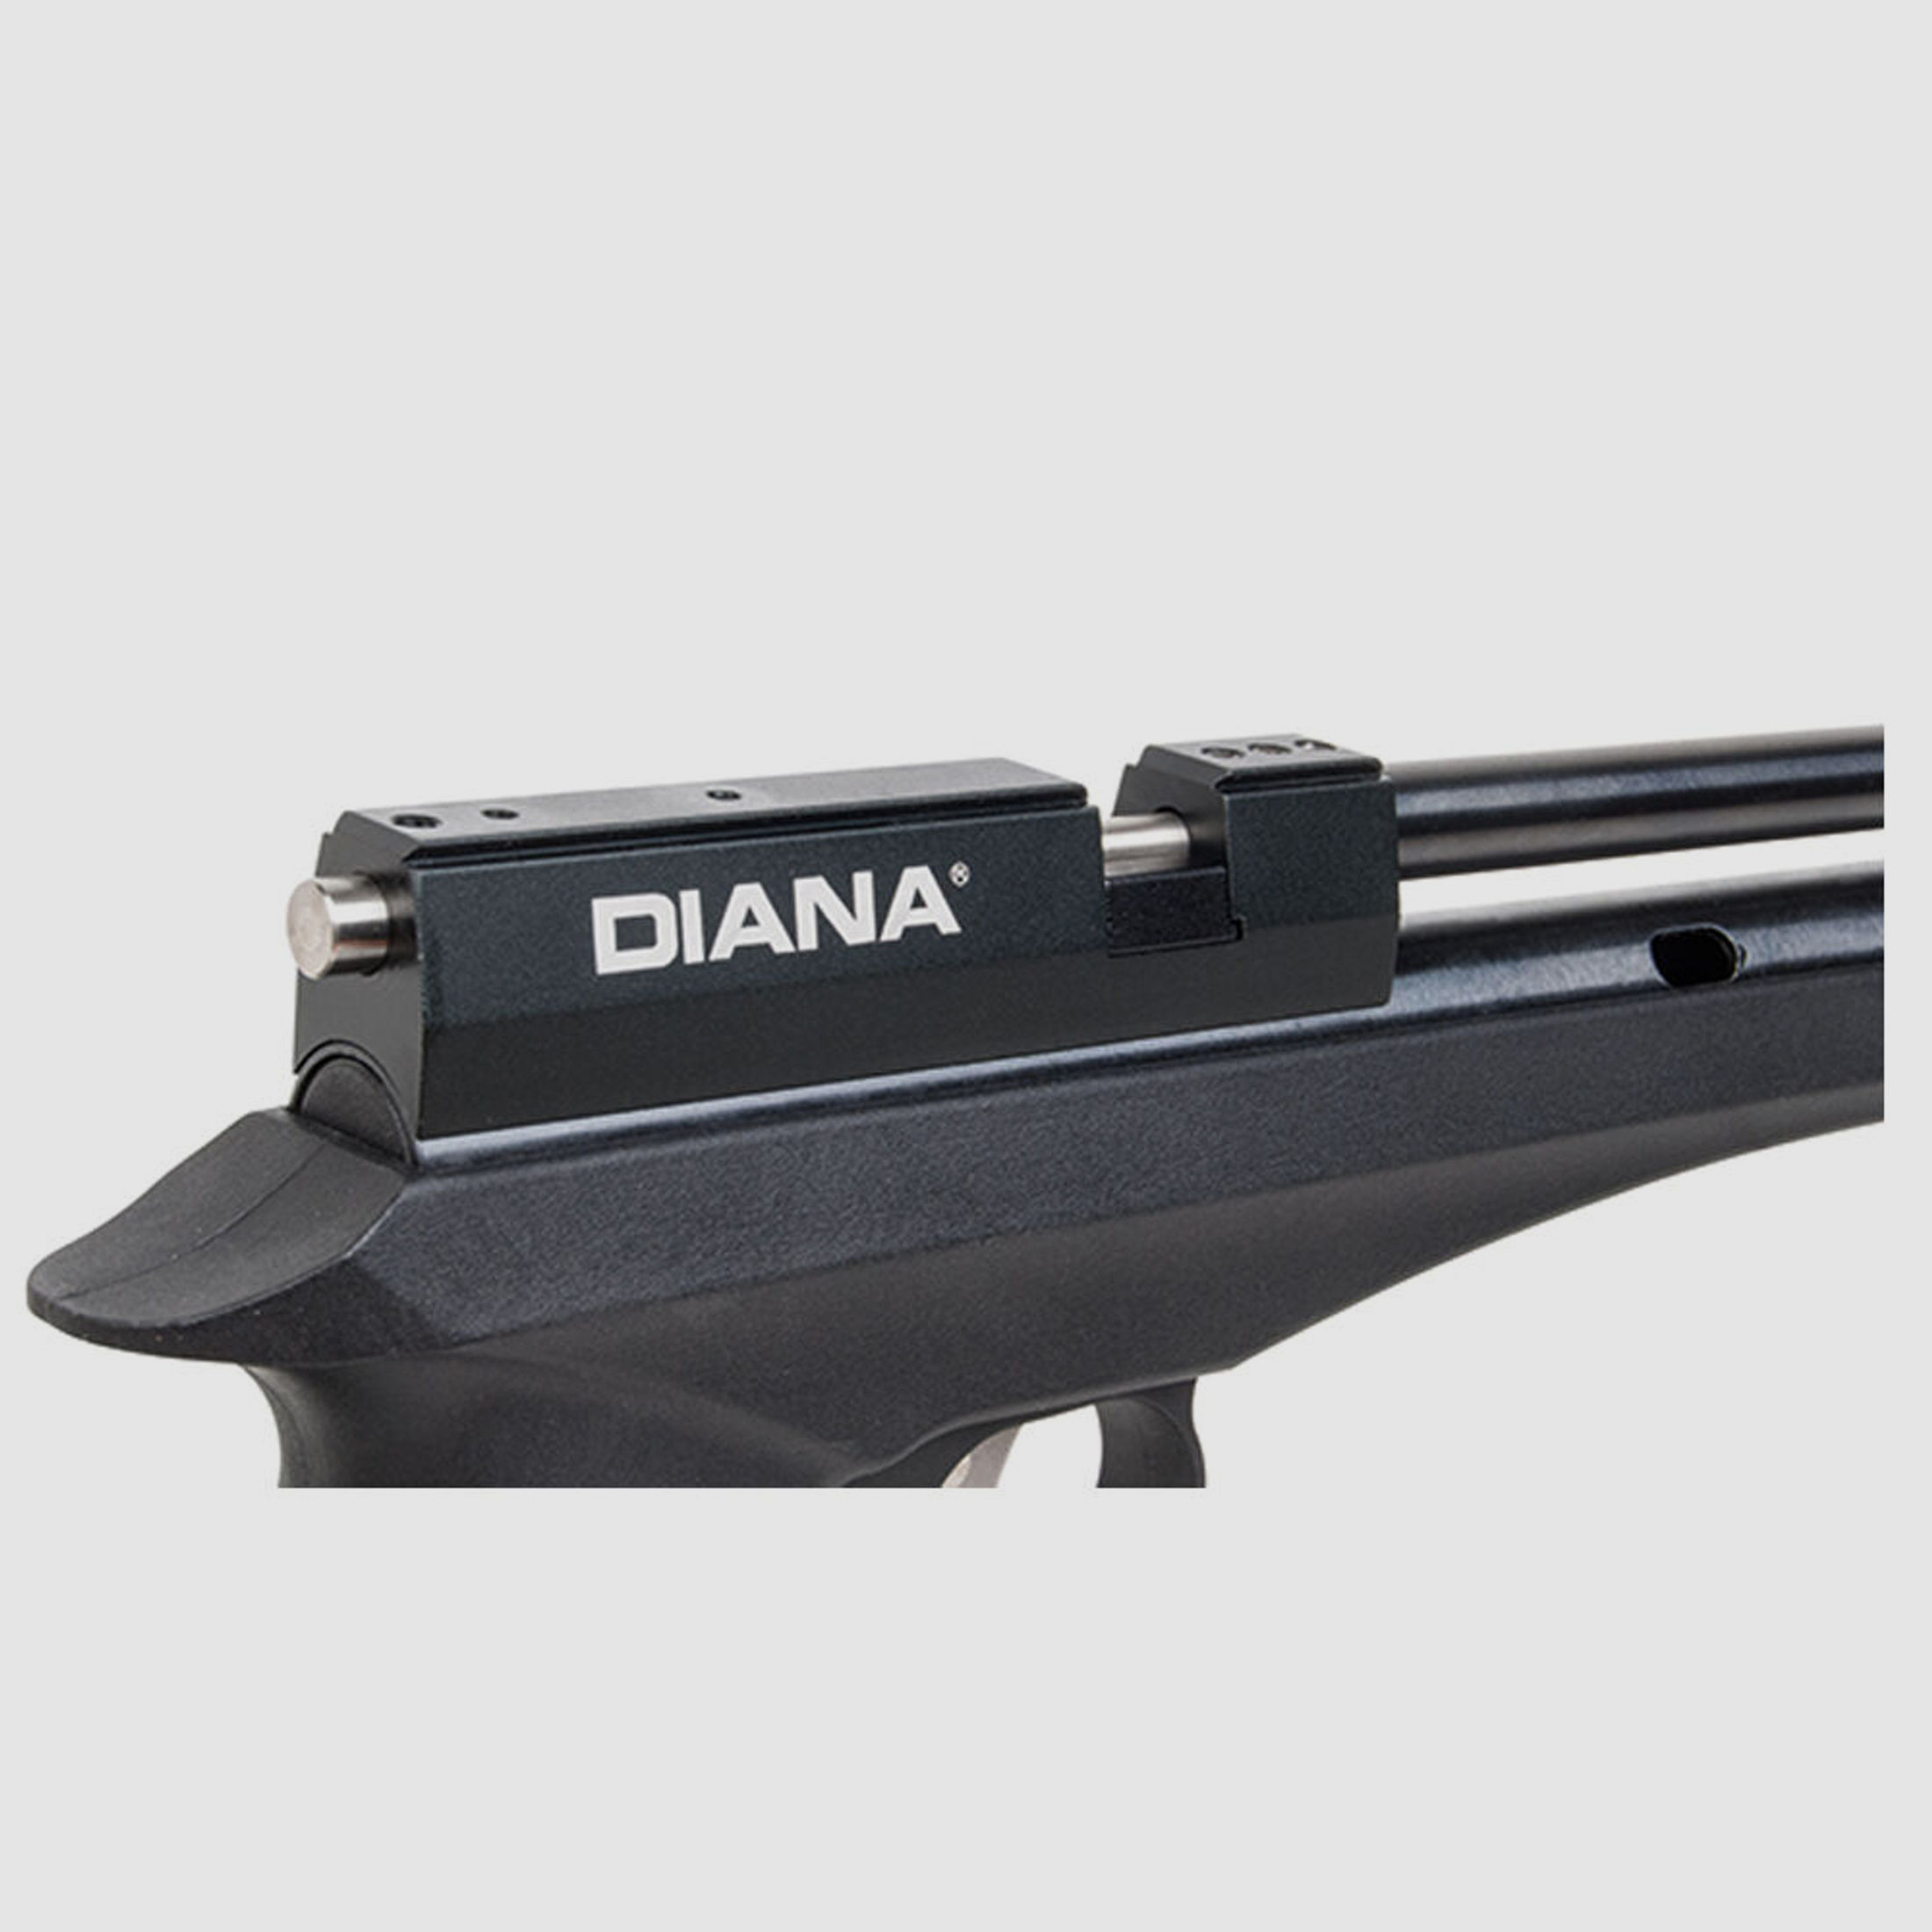 Diana	 DIANA Chaser Pistol CO2 Set 4,5 mm Diabolos Scheibenkasten